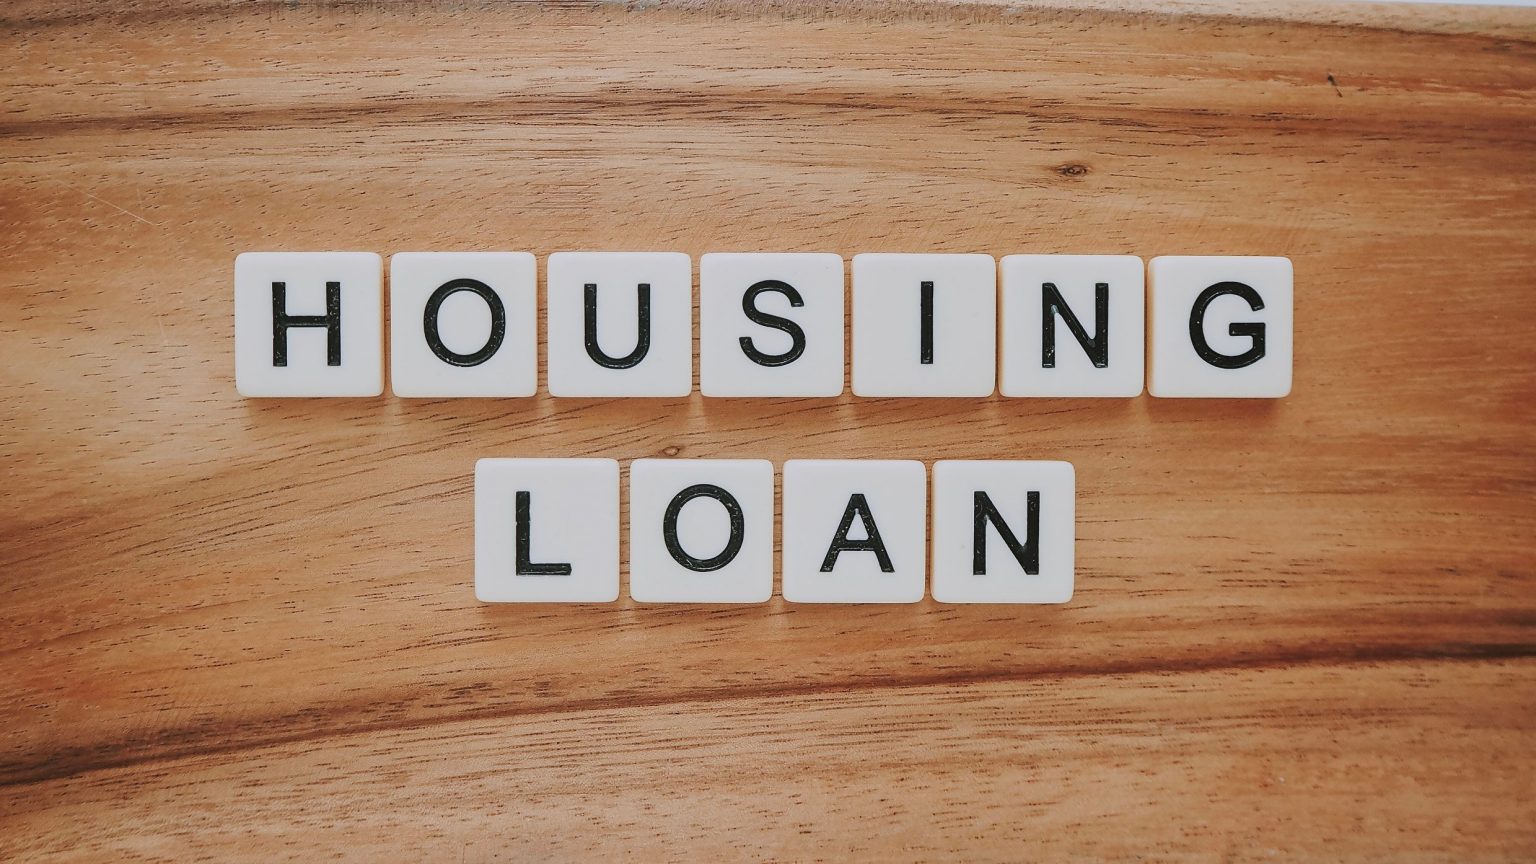 home equity loan